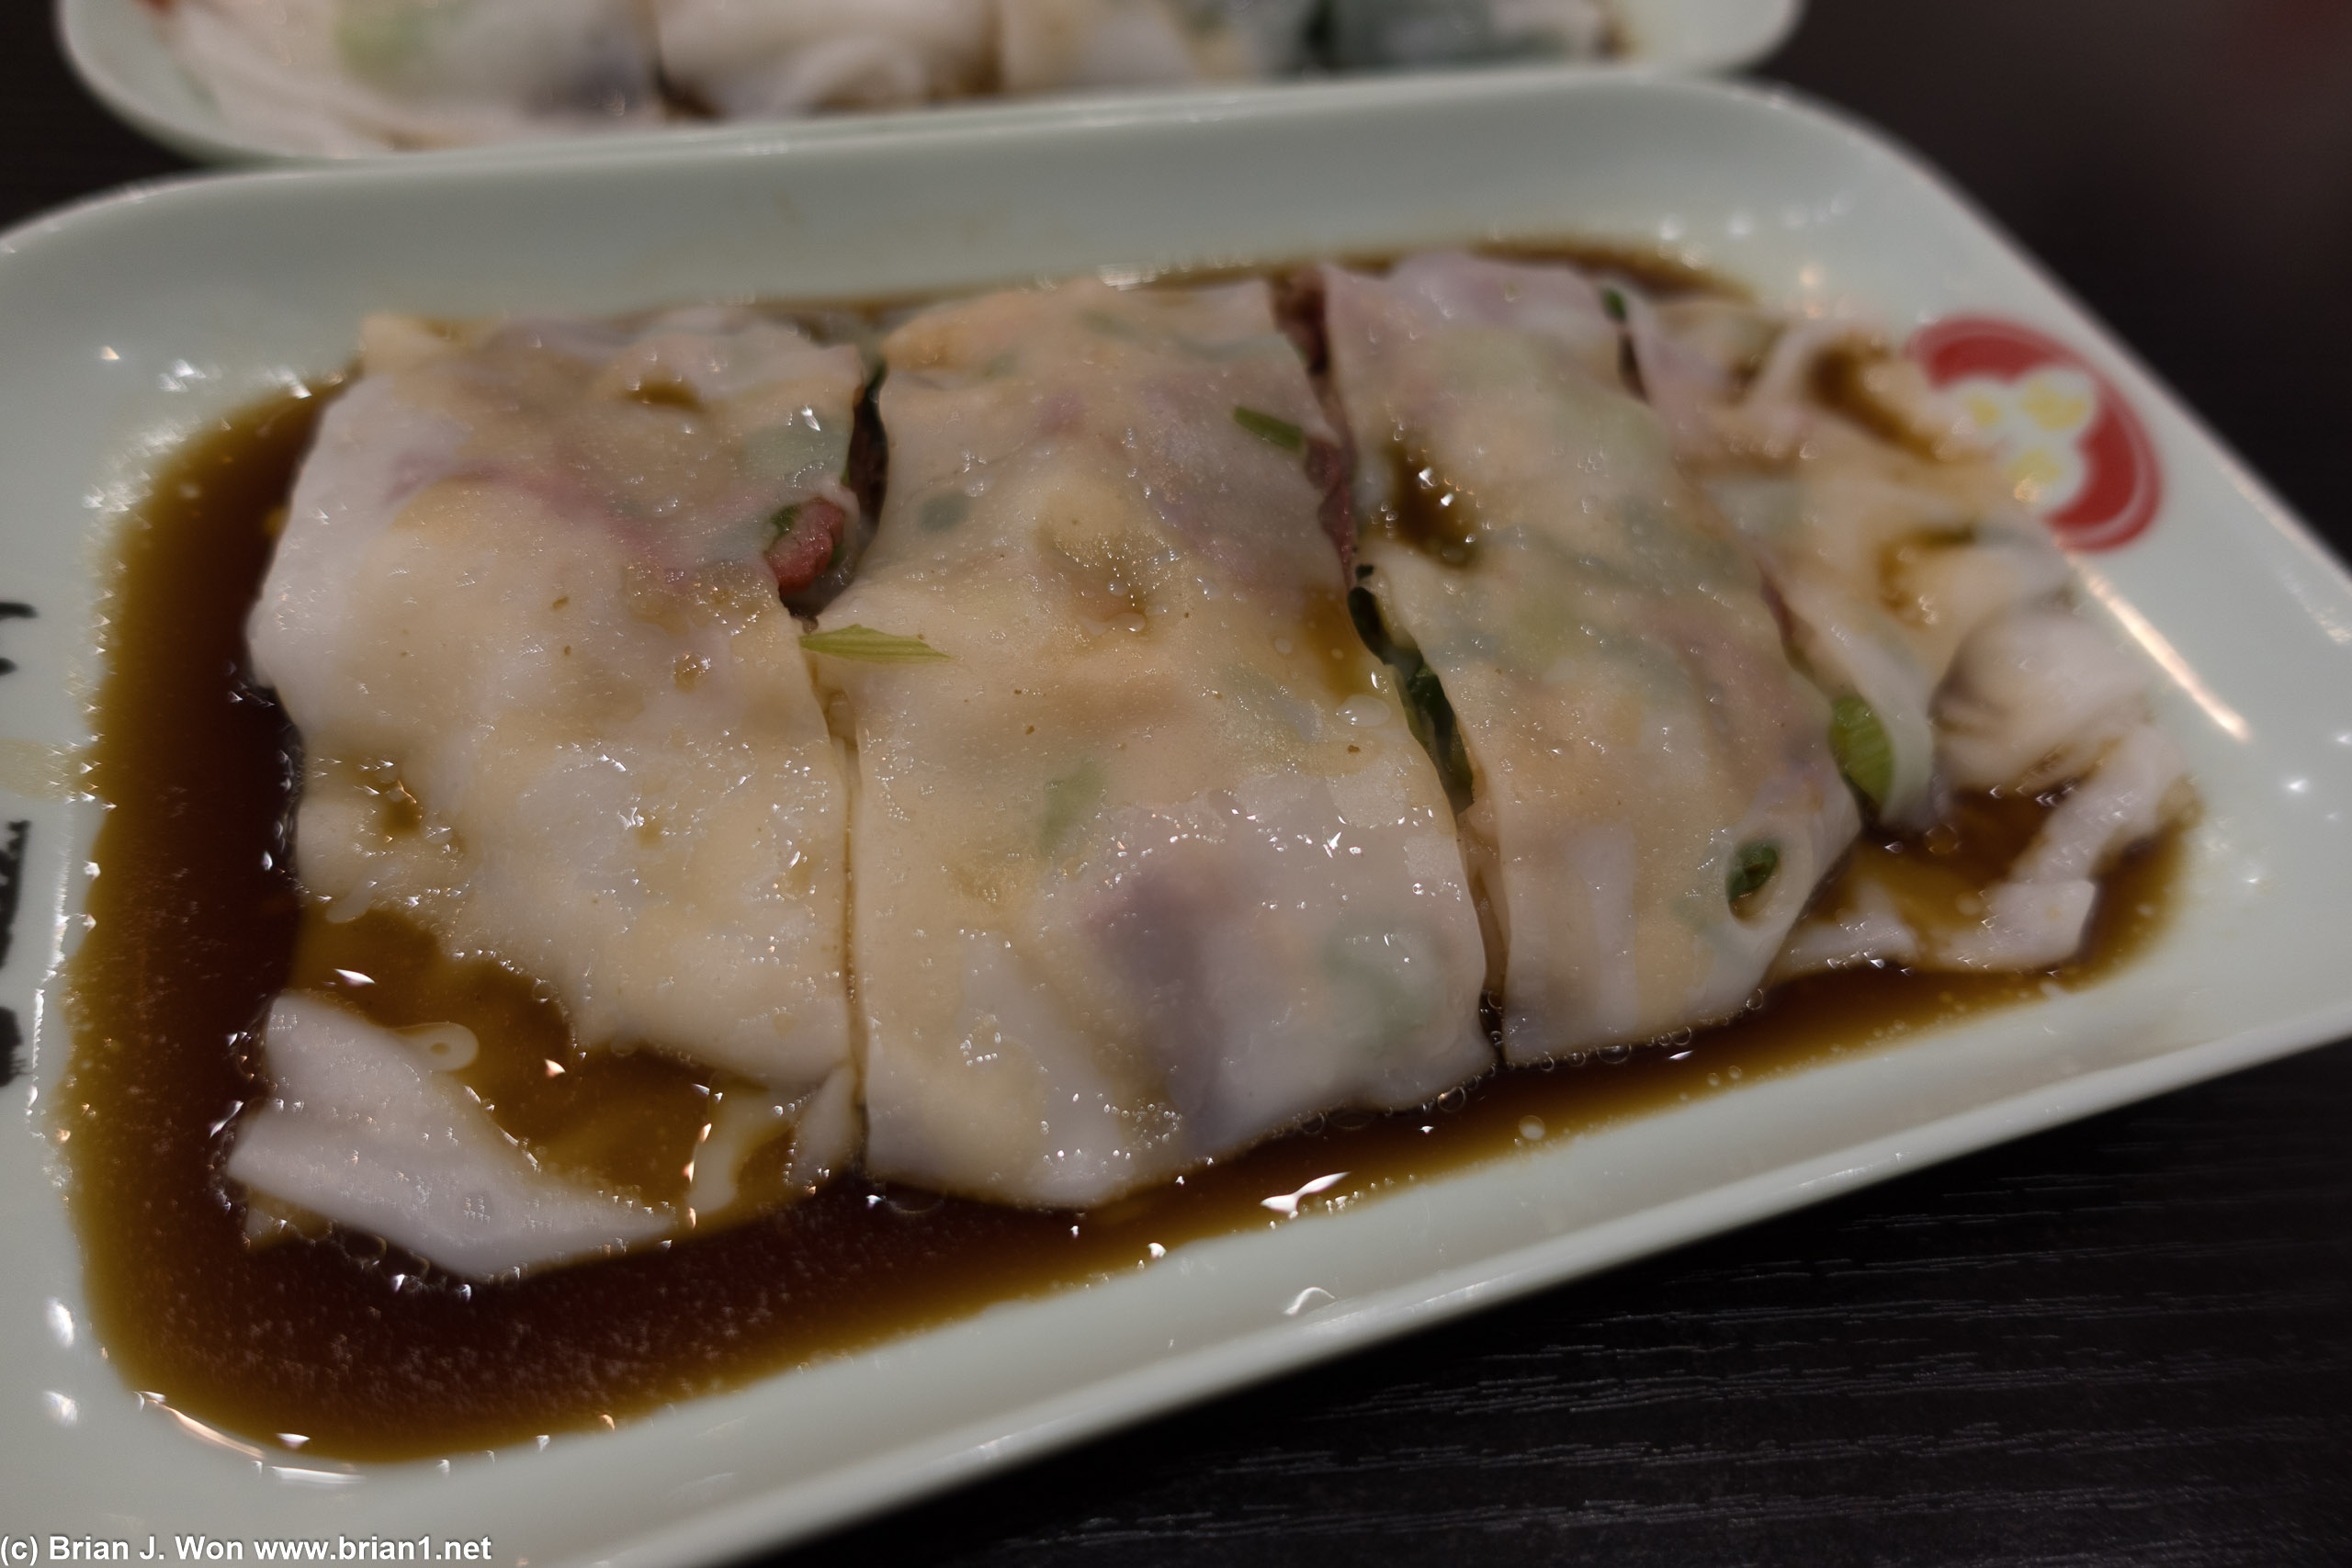 Char siu cheung fun. Pretty tasty. Lots of dried shrimp too.